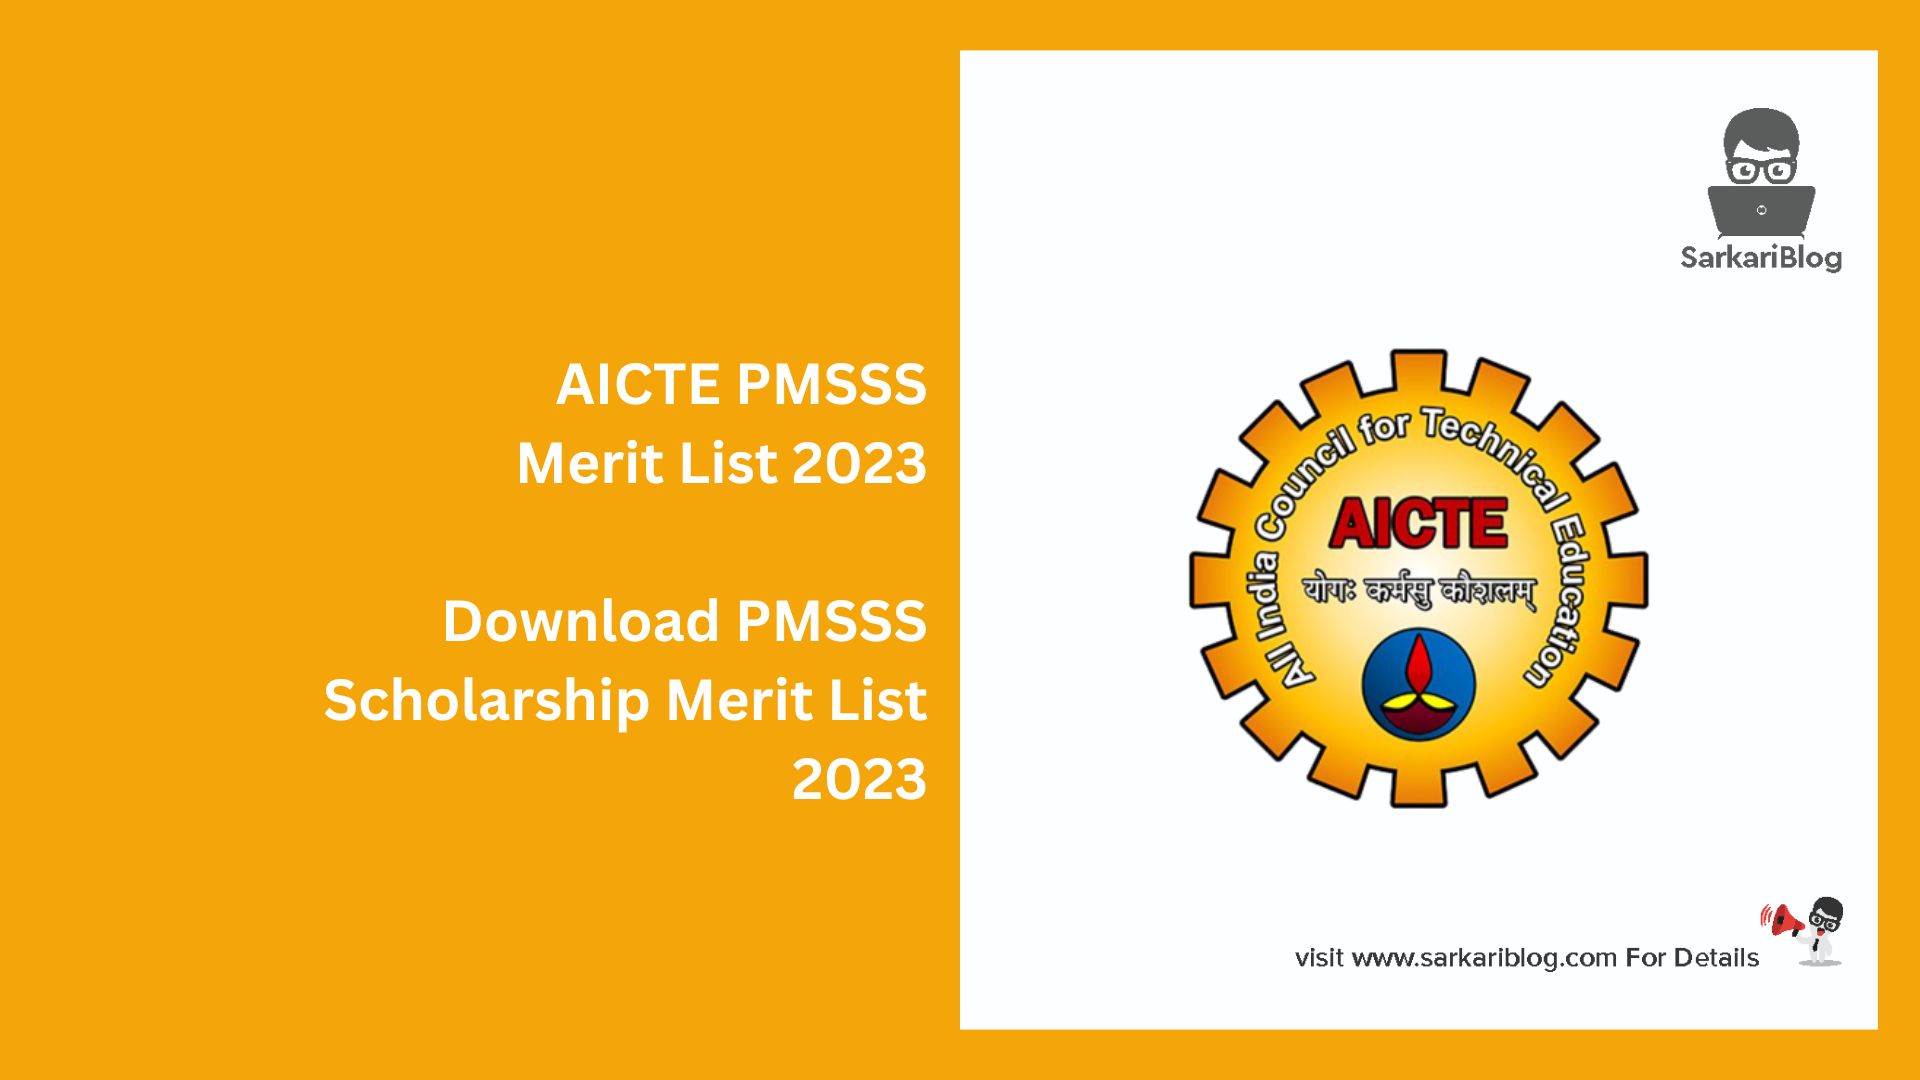 AICTE PMSSS Merit List 2023